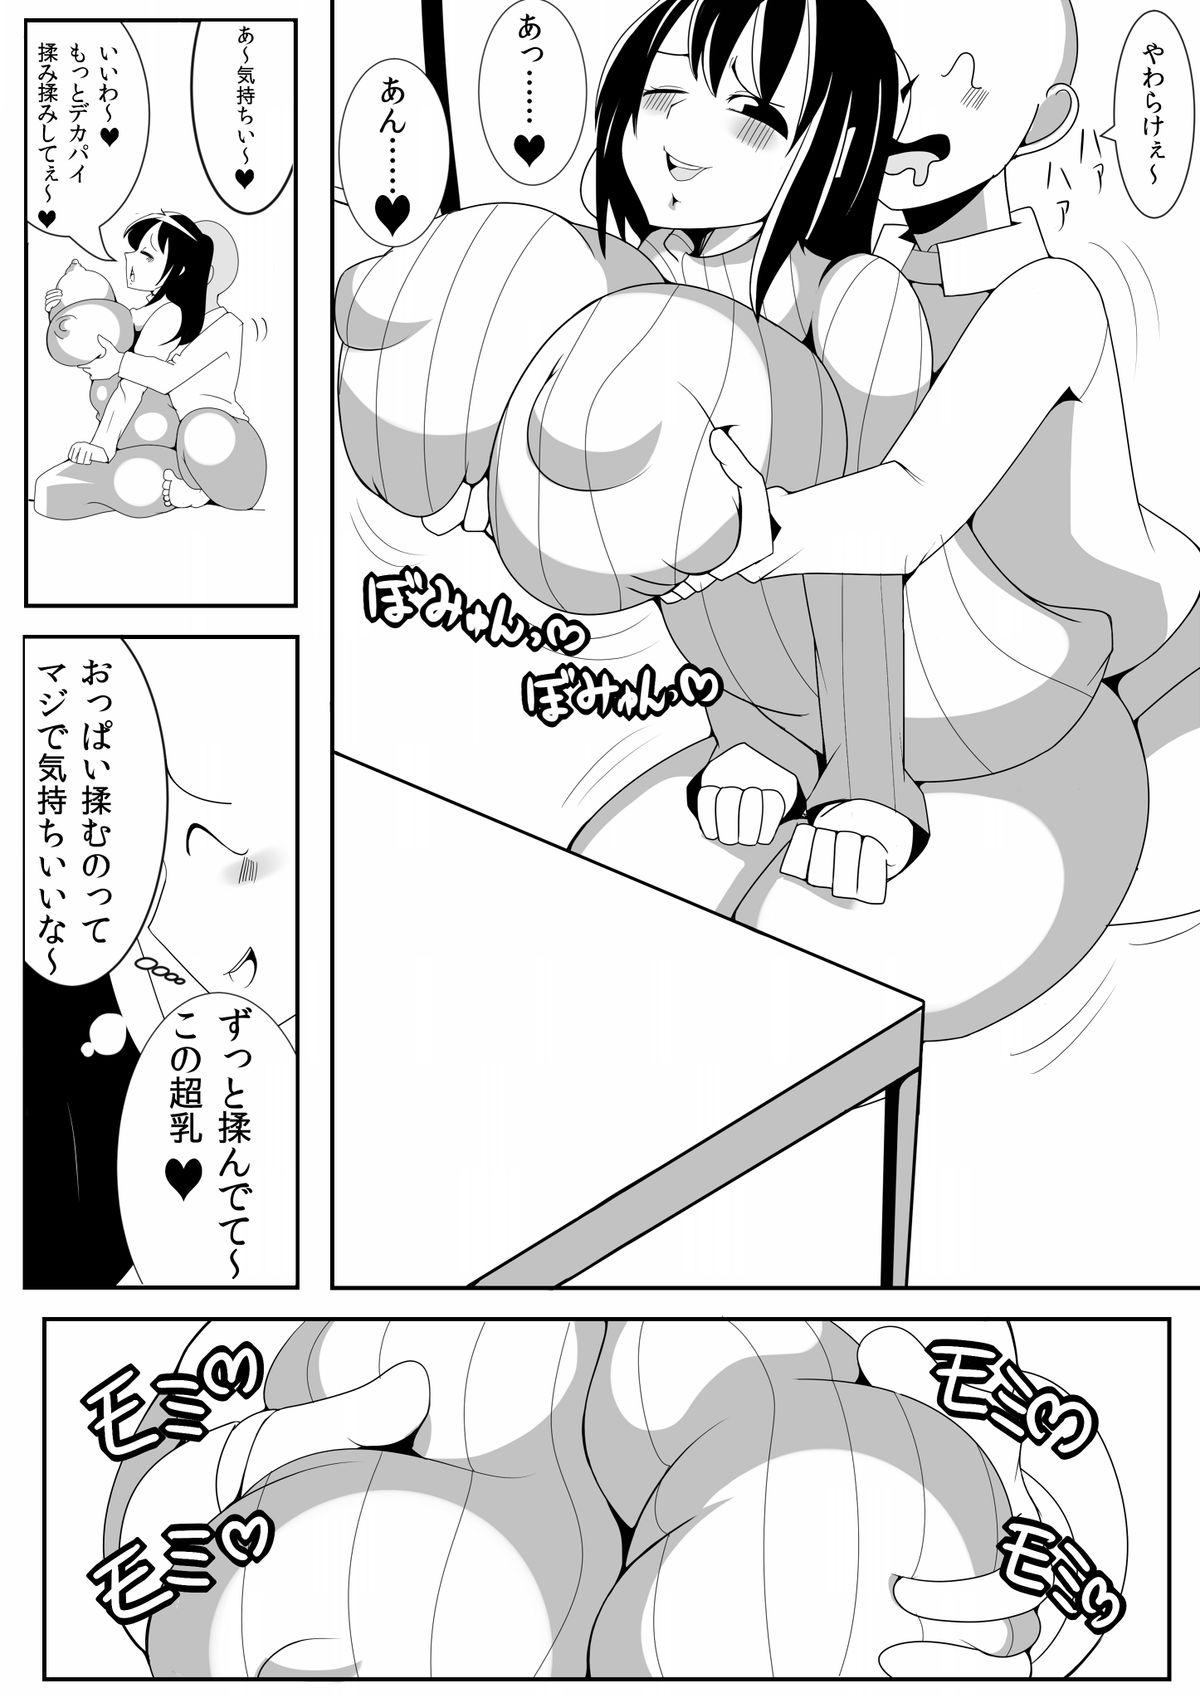 Teensex Asaokitara Oppai Konnani ga Okkiku Nacchatta Masturbating - Page 8